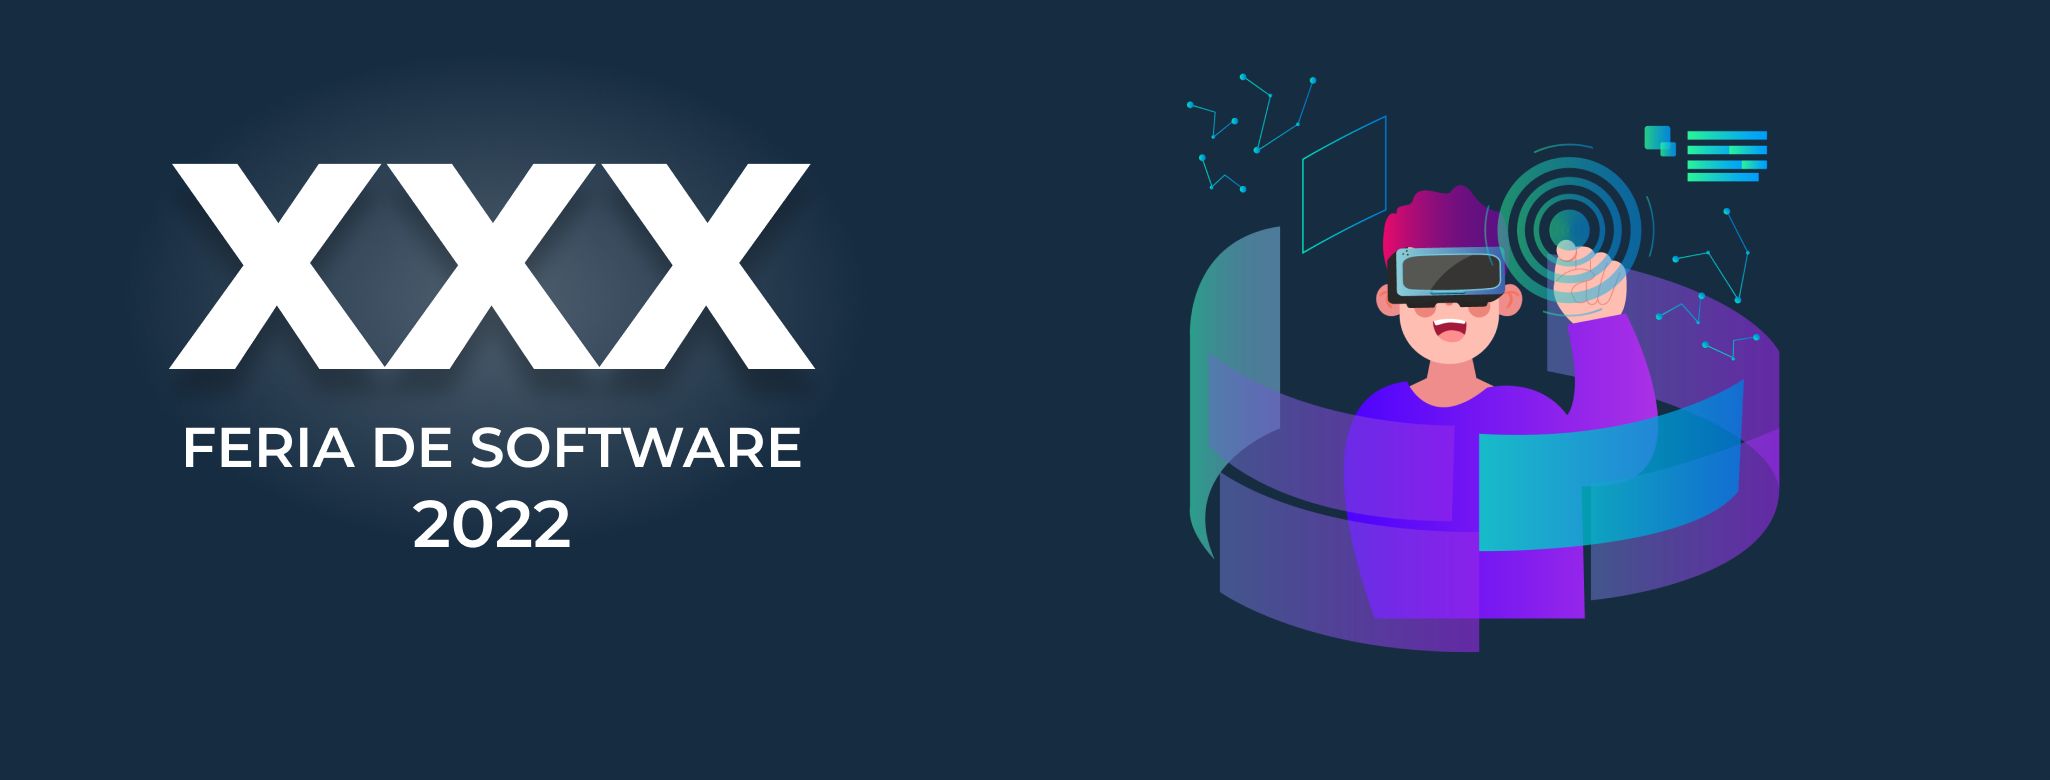 XXX Feria de Software 2022